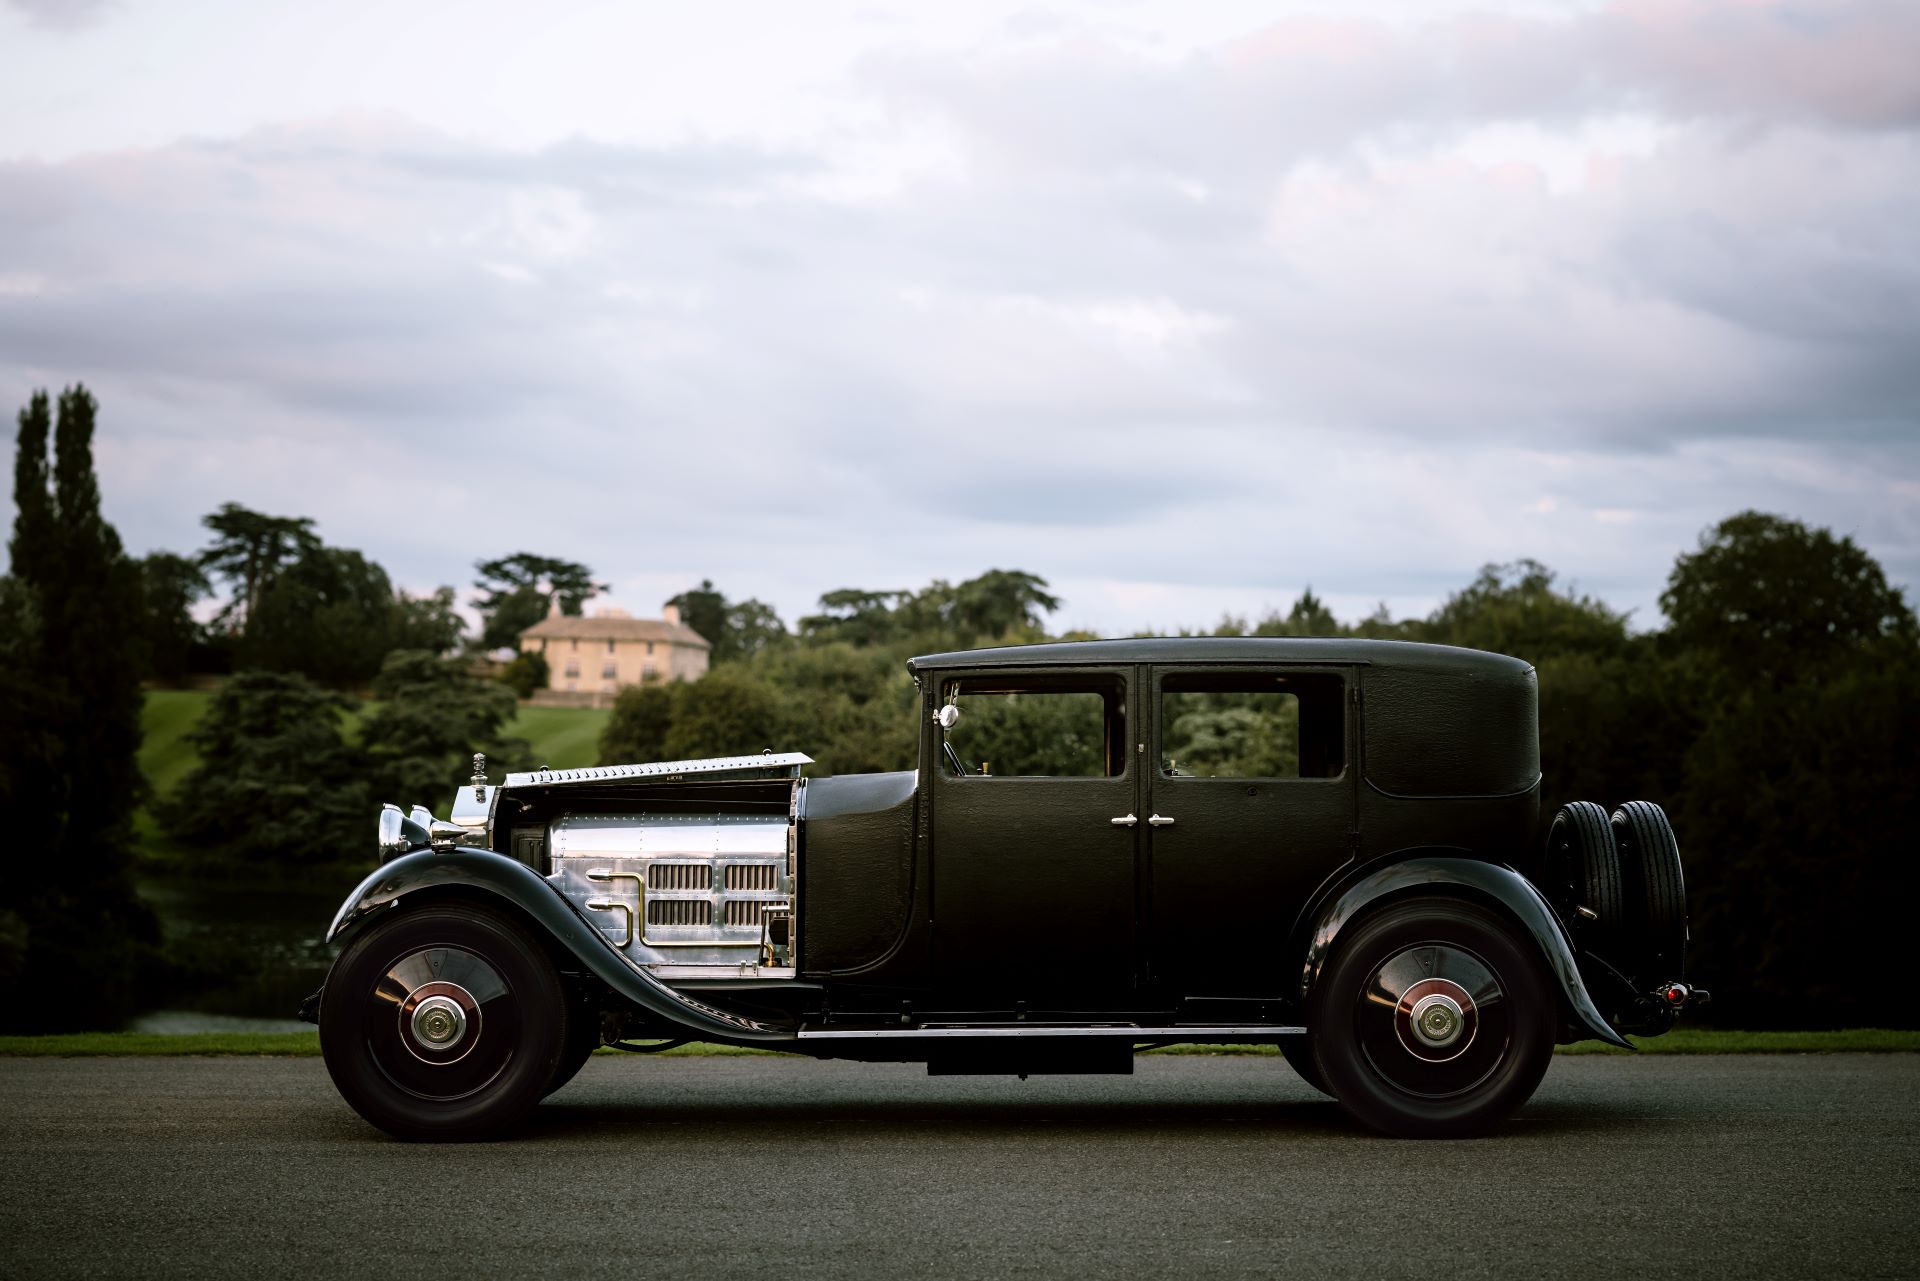 1929 Rolls-Royce Phantom II converted to clean electric power